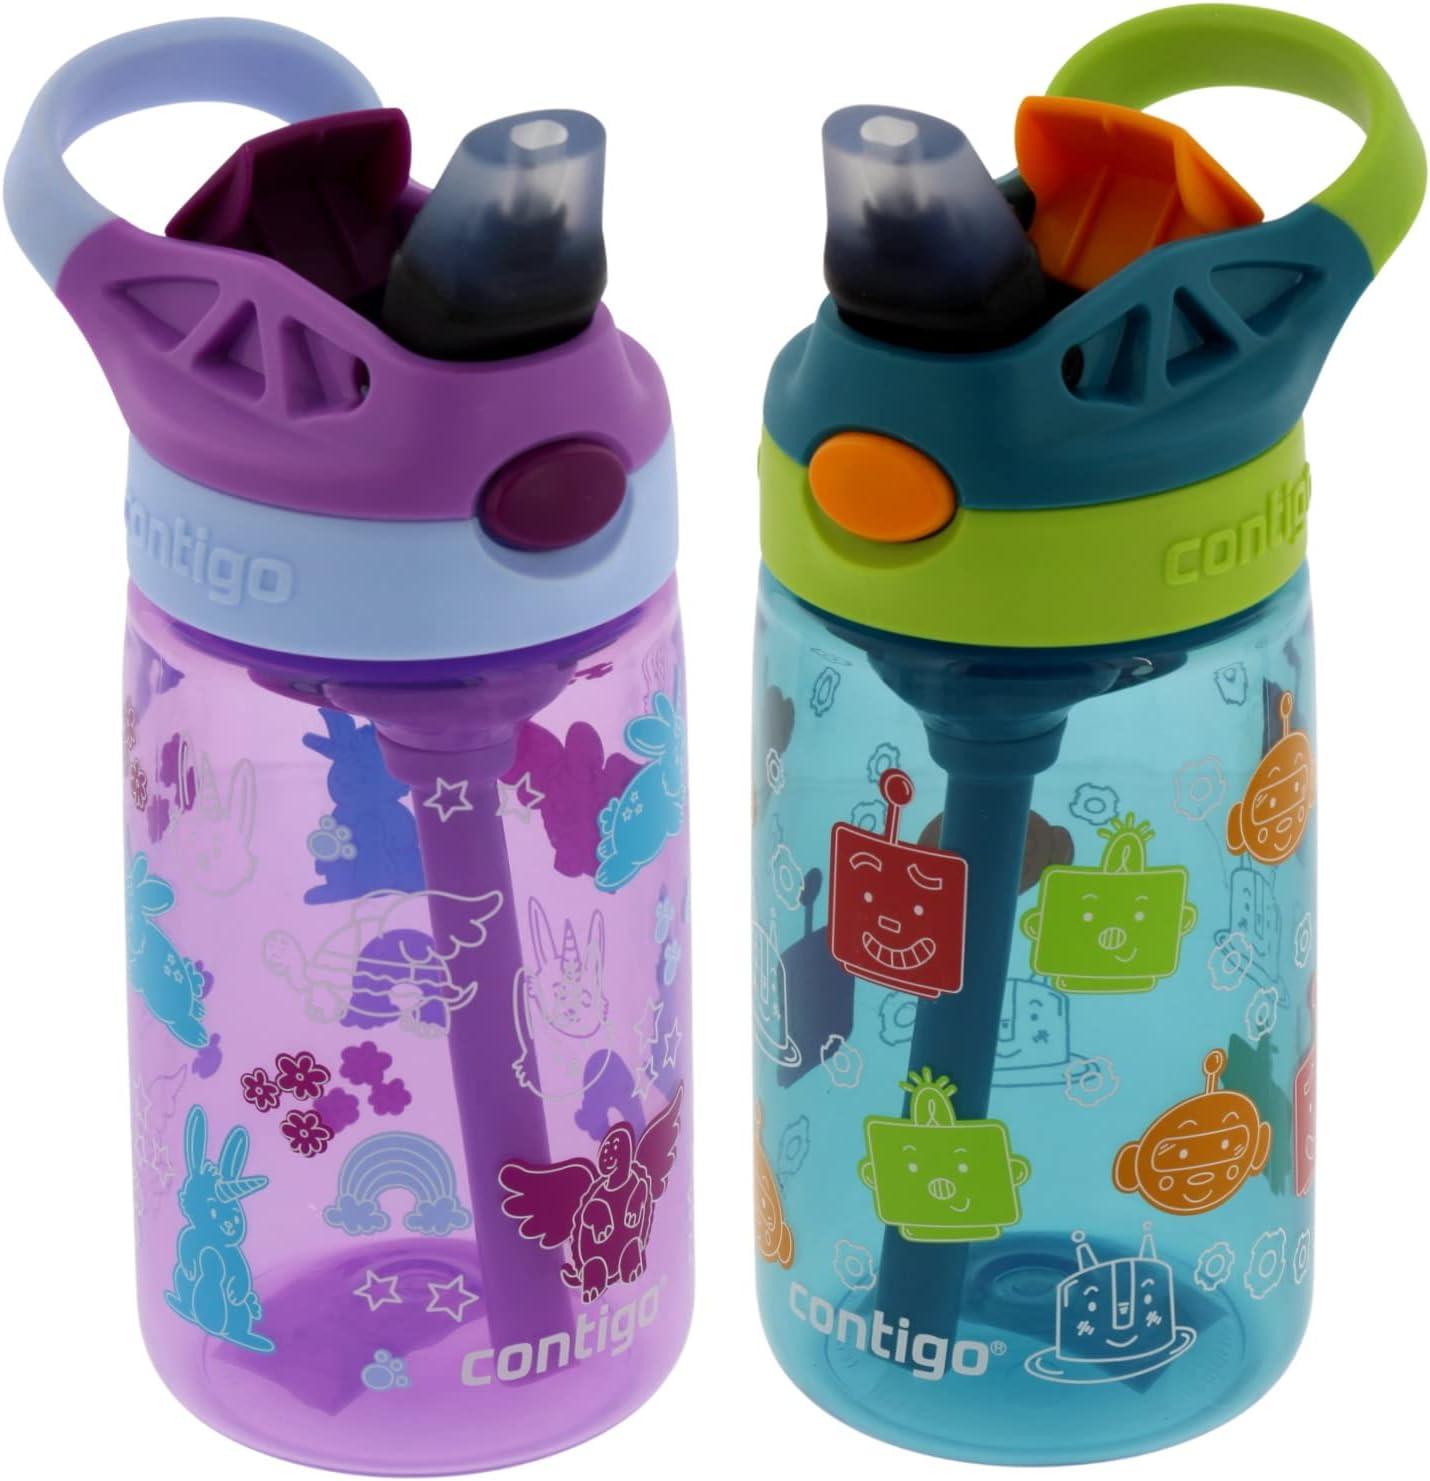 Contigo 14 oz Kids Plastic Water Bottle with Straw Lid 2 Pack - Purple  Bunnicorns and Blue Friendly Bots